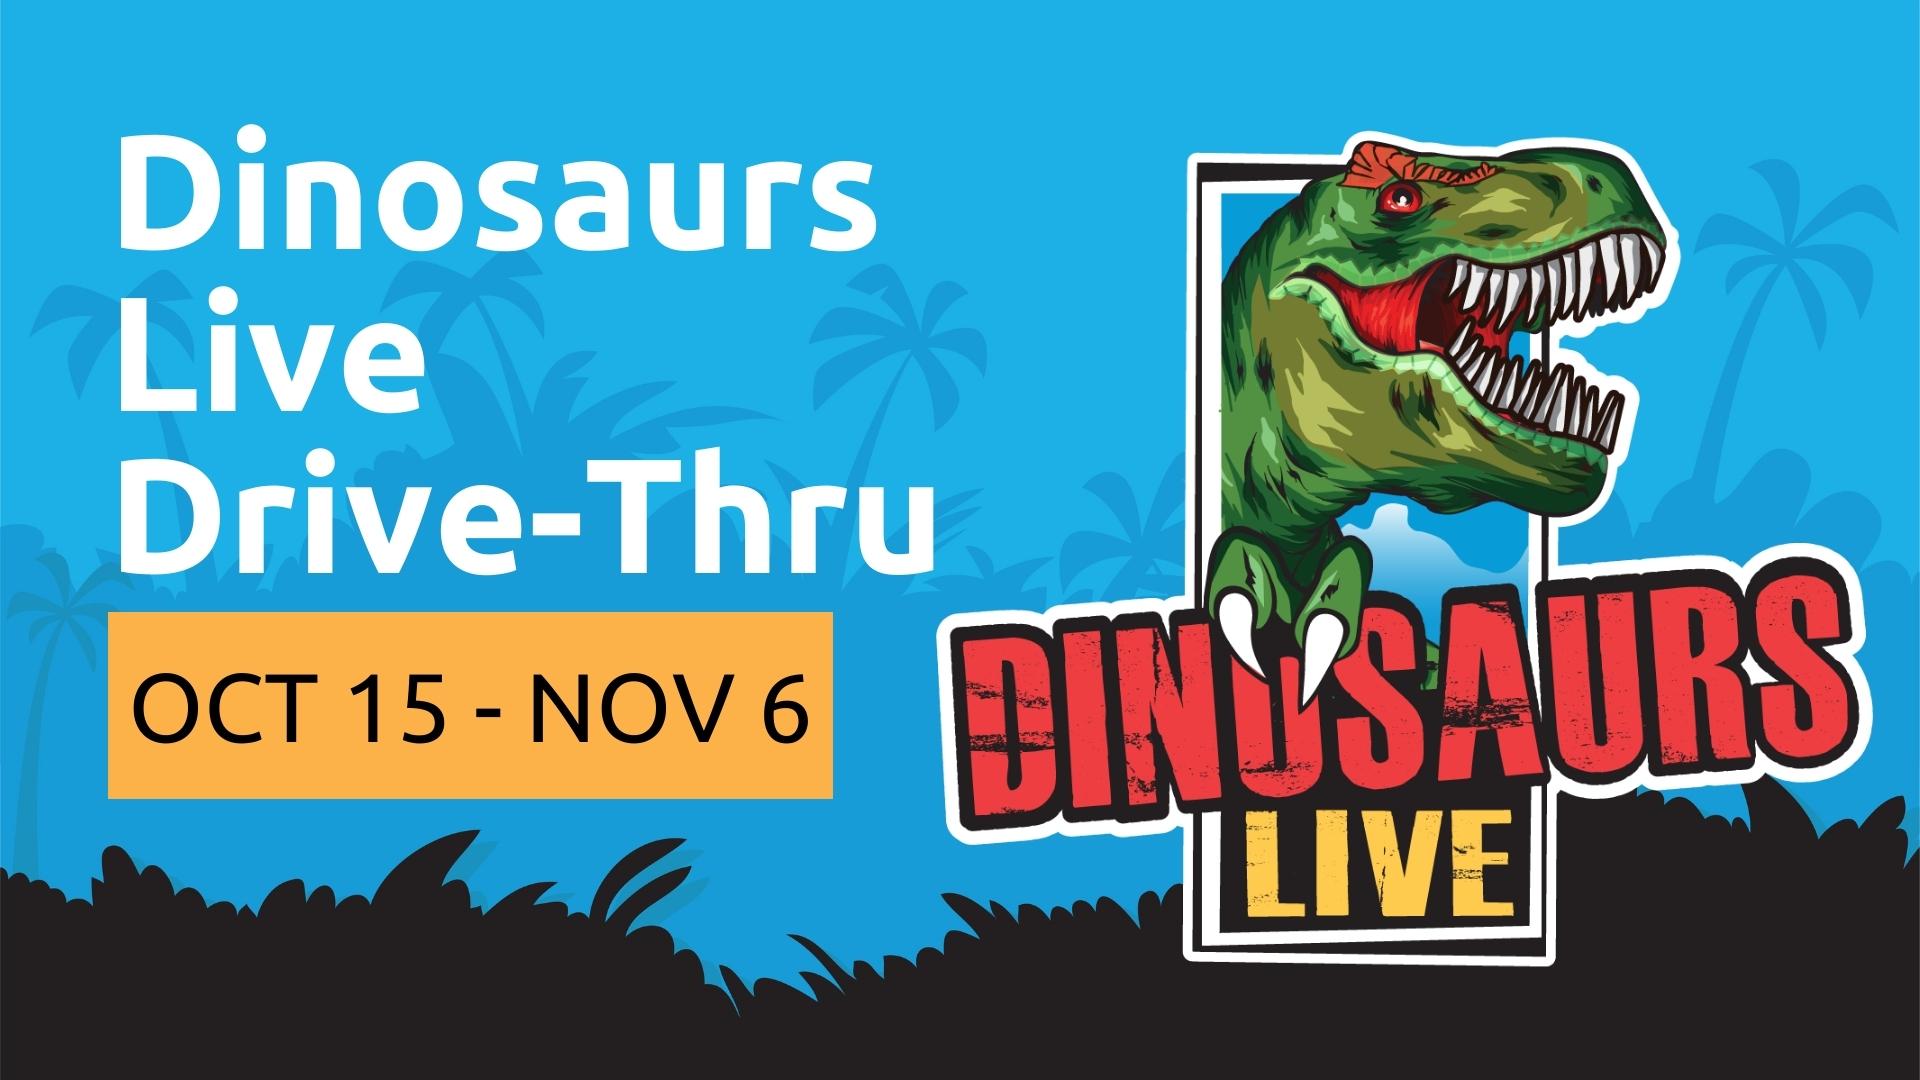 Safari Niagara - Dinosaurs Live Discount Code - myWelland